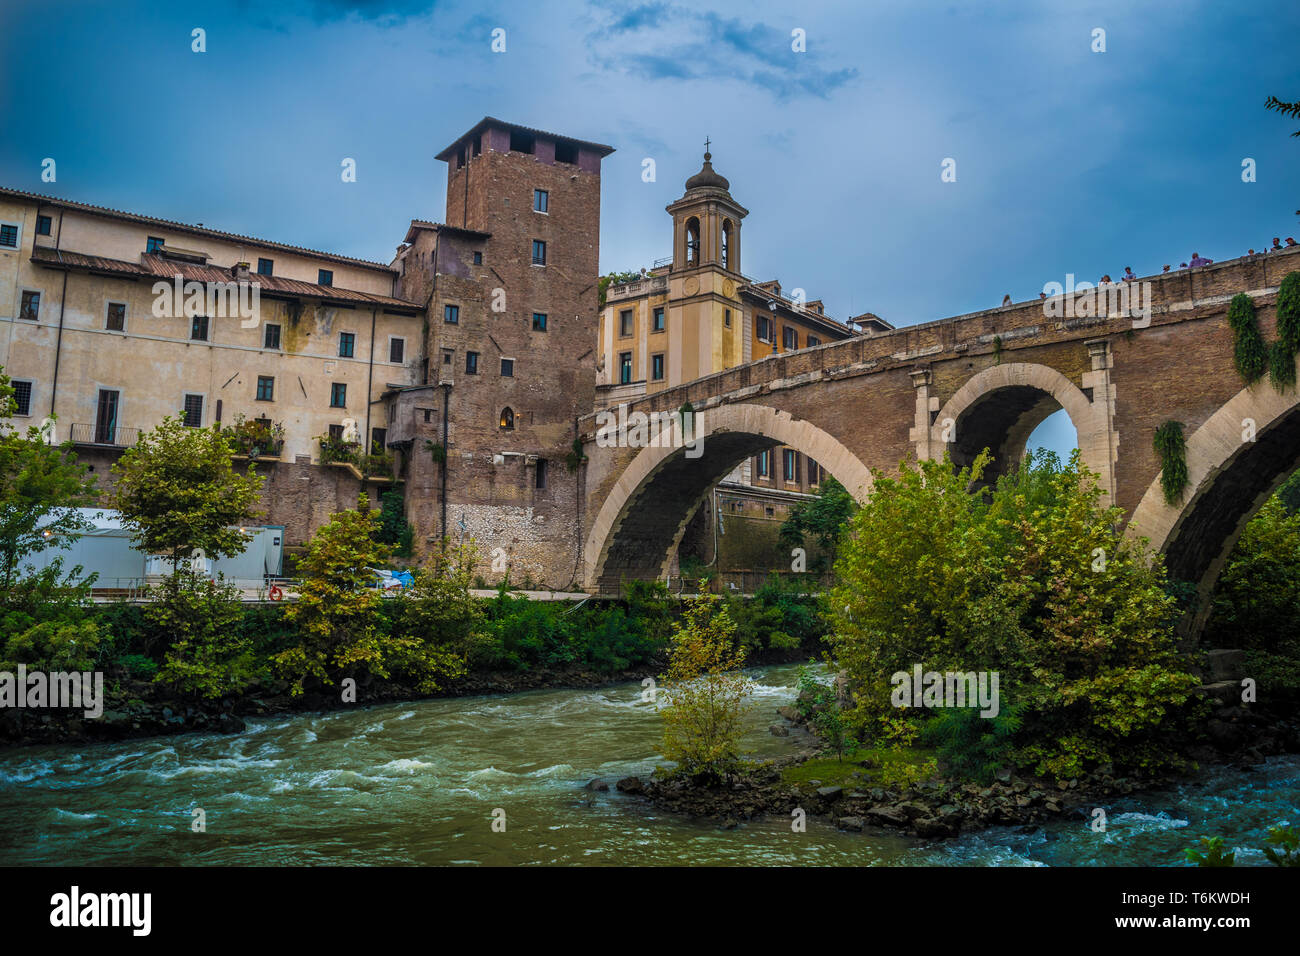 Caetani Castell and Fabricio Bridge in Rome - Italy Stock Photo